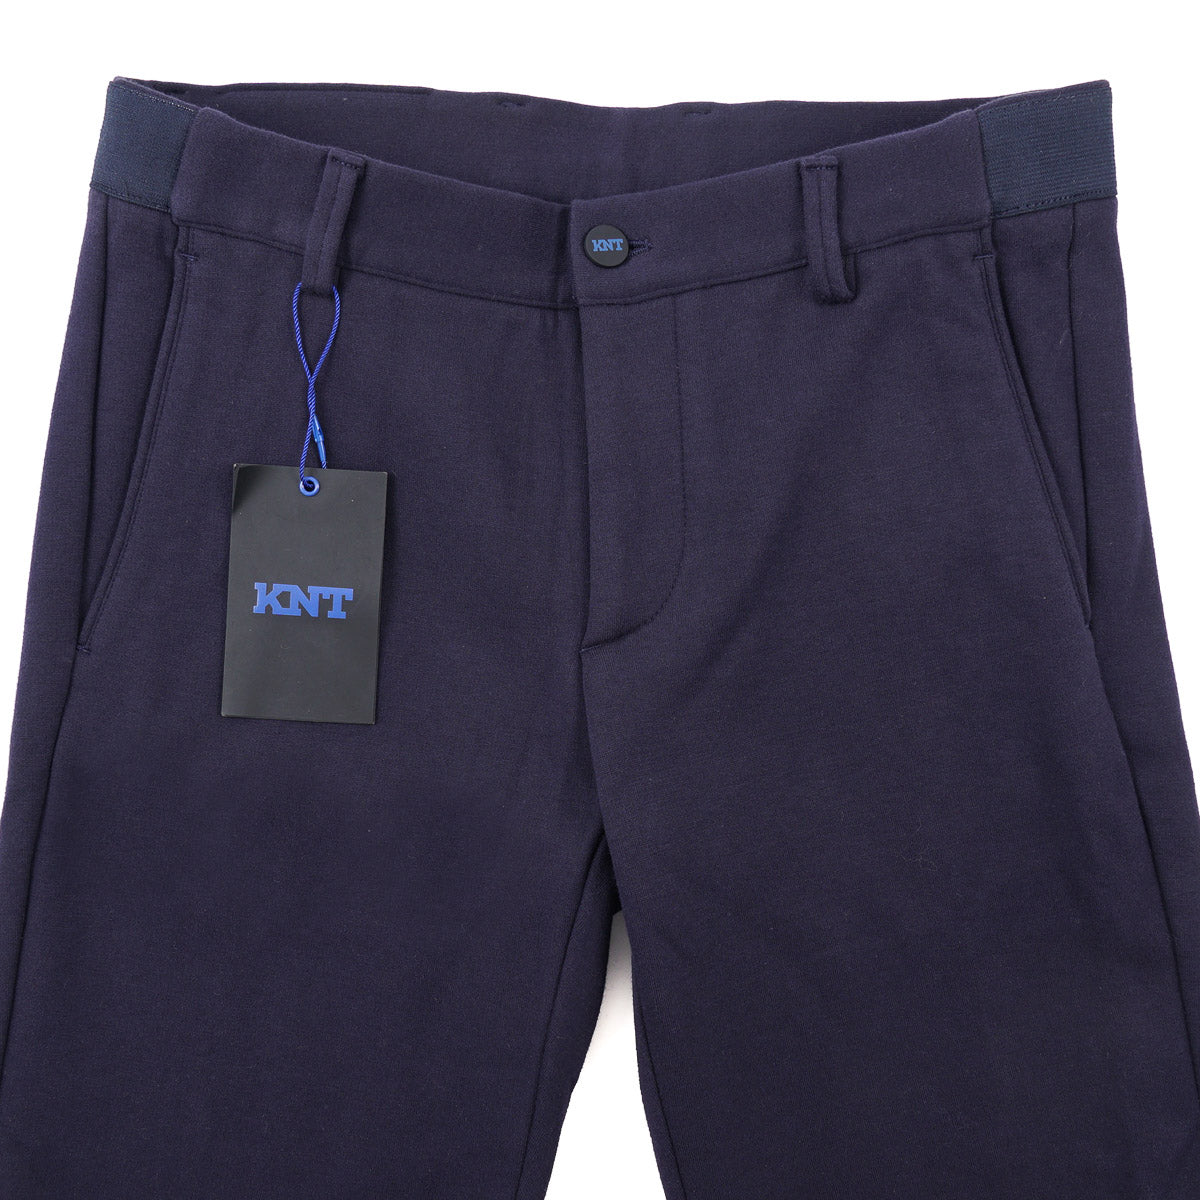 Kiton KNT Jersey Cotton Chino Pants - Top Shelf Apparel